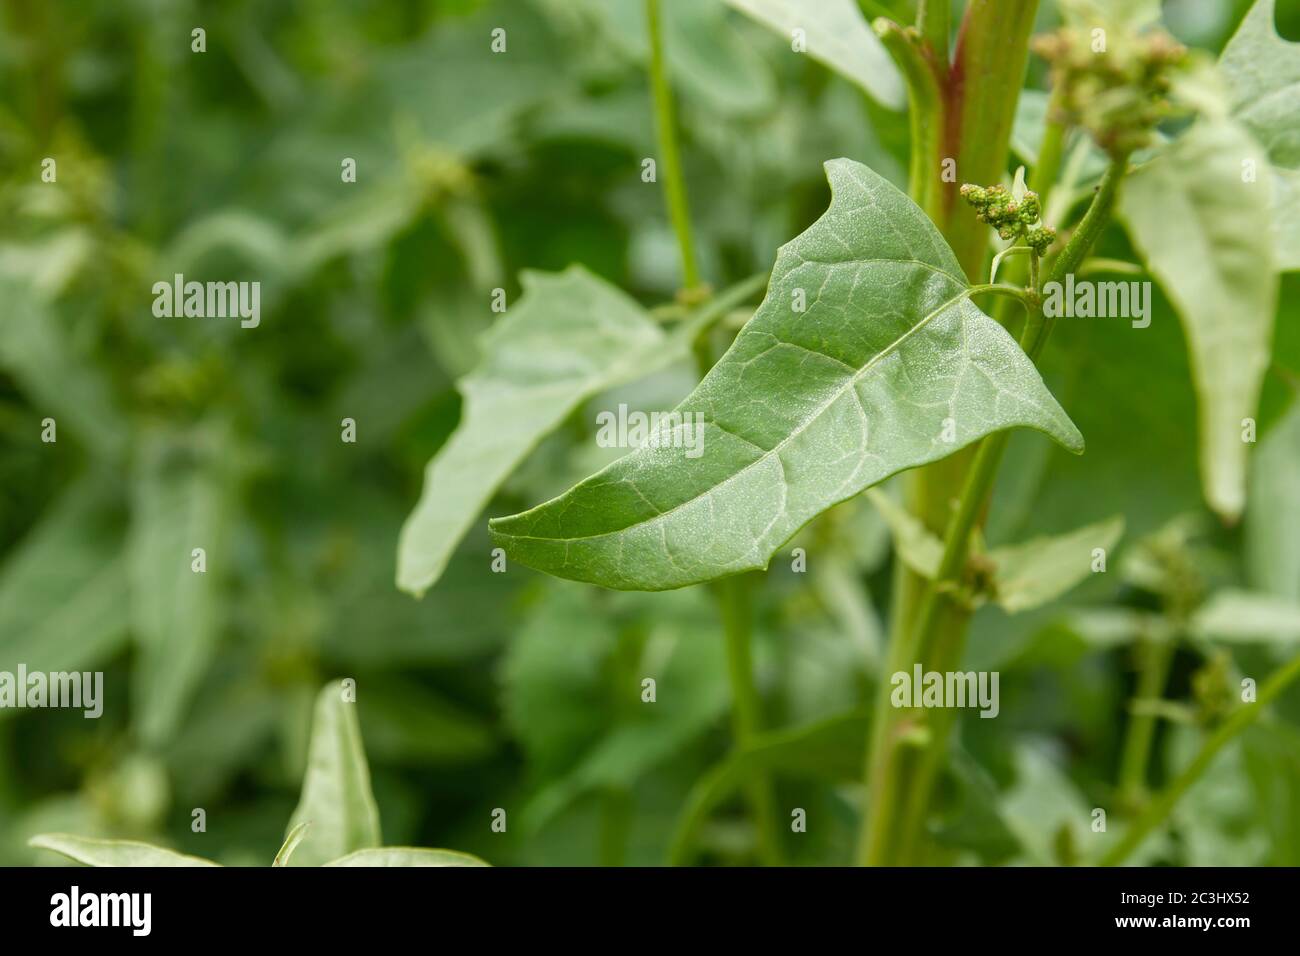 Wachsende Spinat Pflanze grünes Blatt aus nächster Nähe Stockfoto